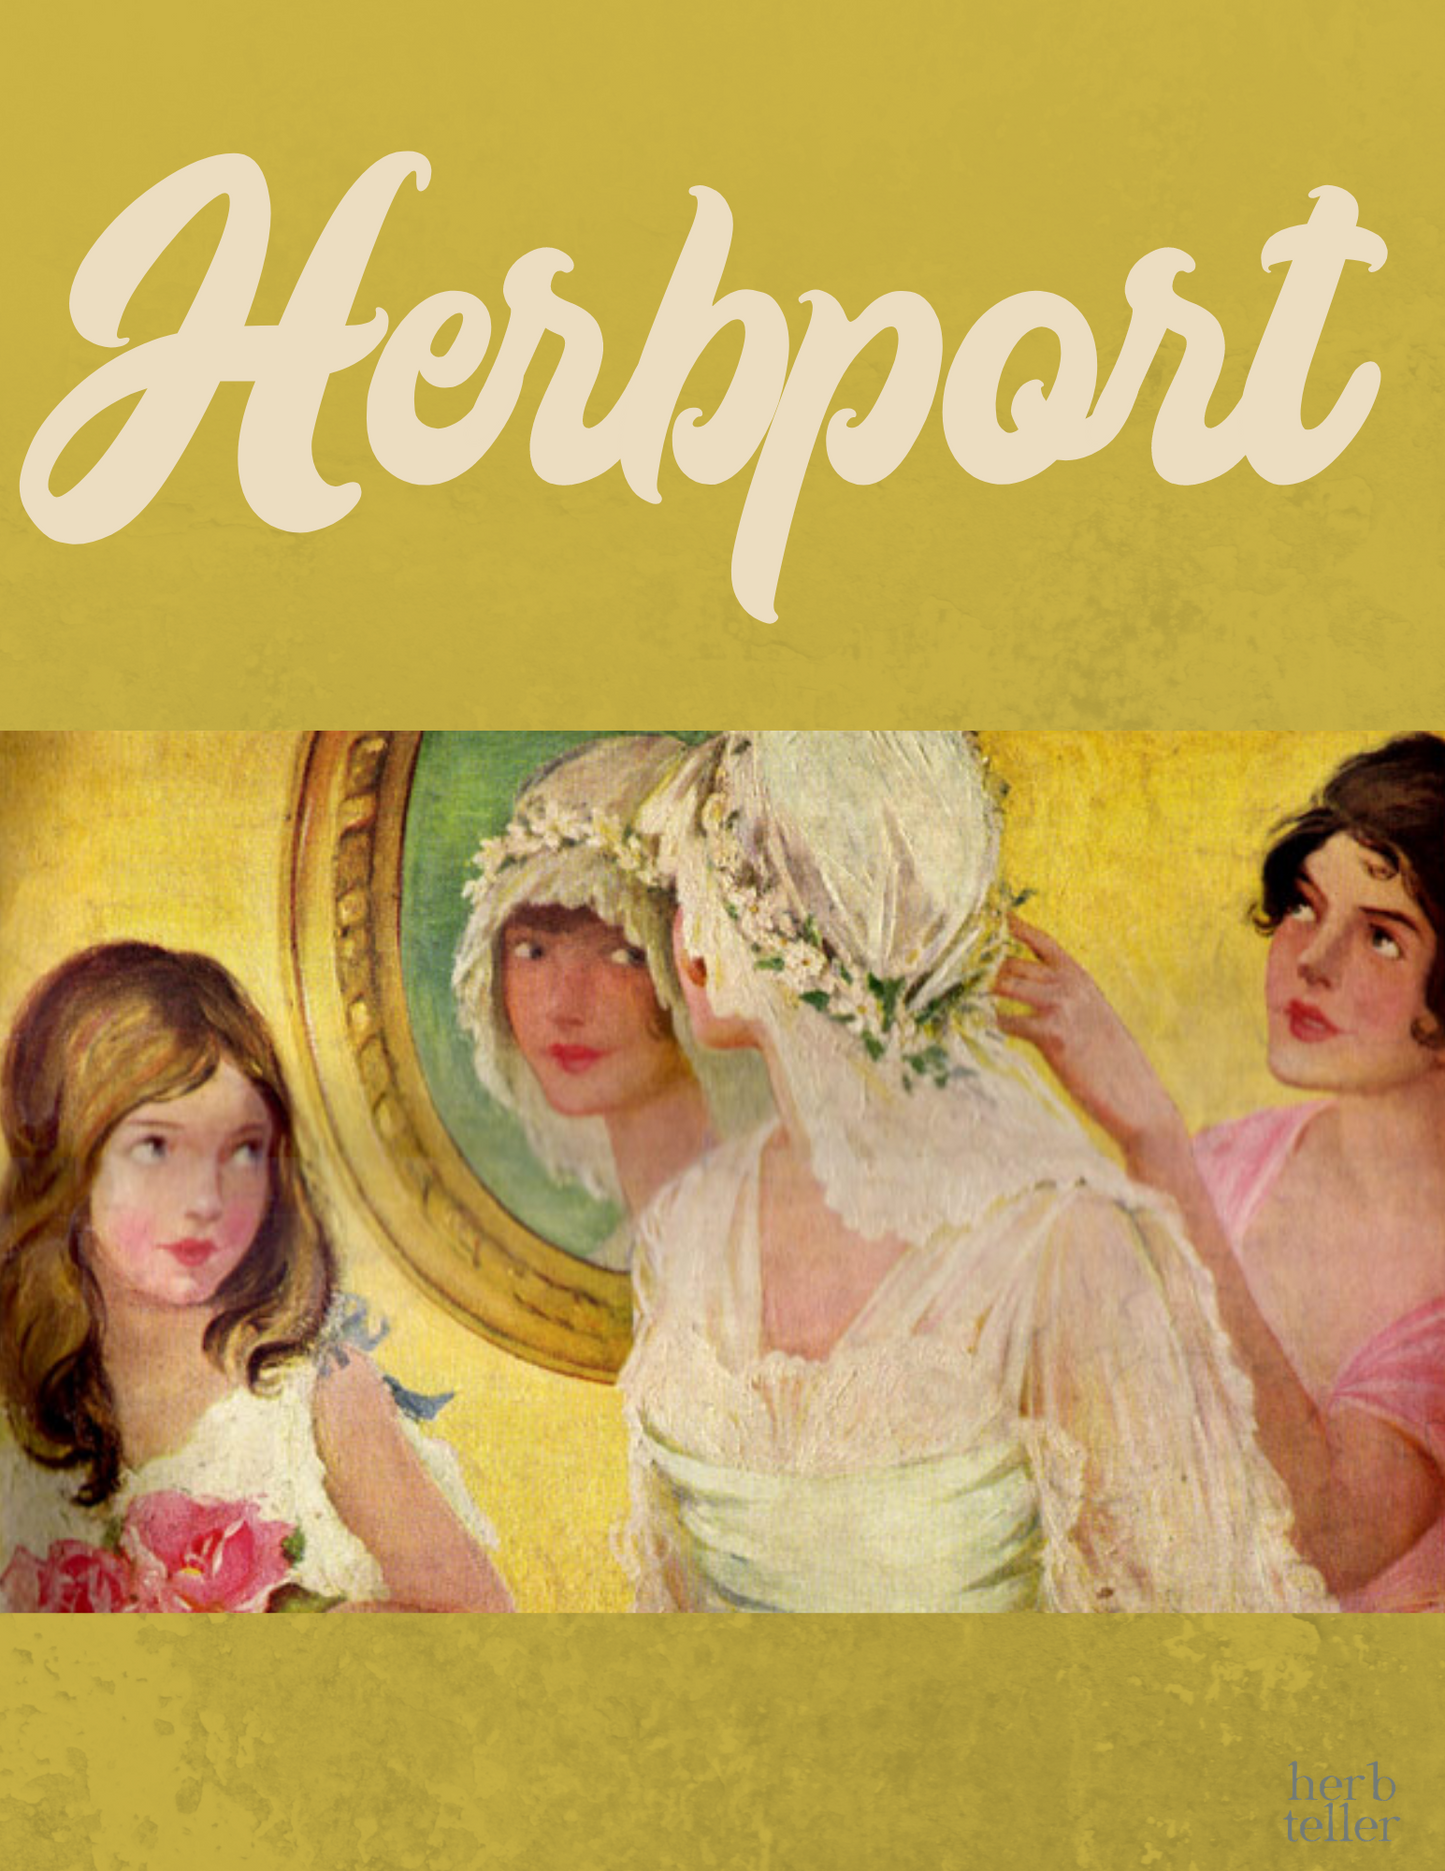 Herbtale: Herbport - Original City Apothecary